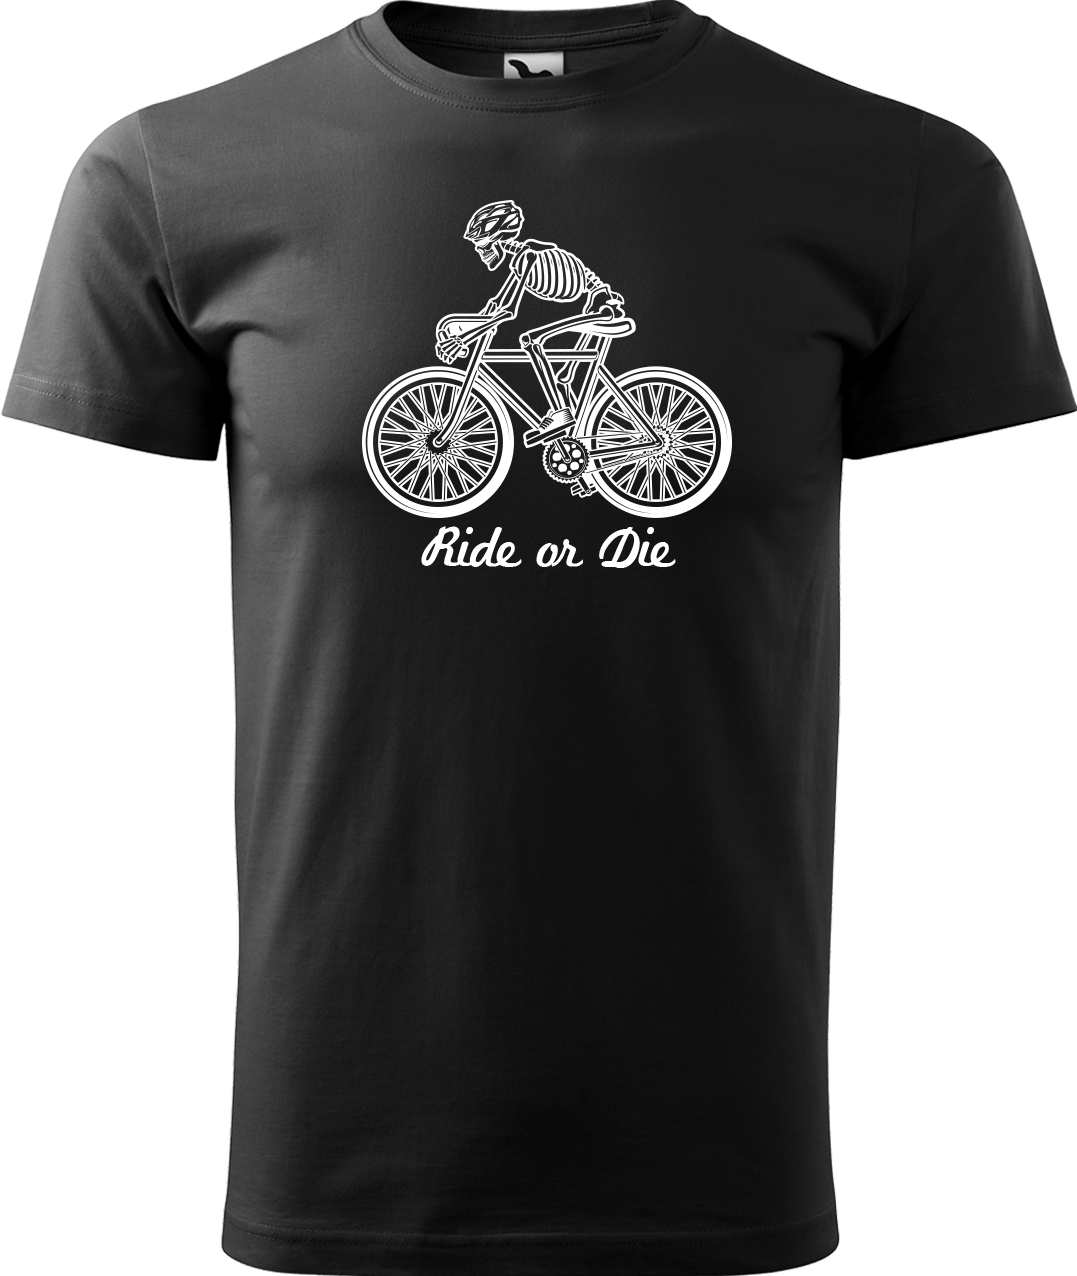 Pánské tričko pro cyklistu - Ride or Die Velikost: XL, Barva: Černá (01)